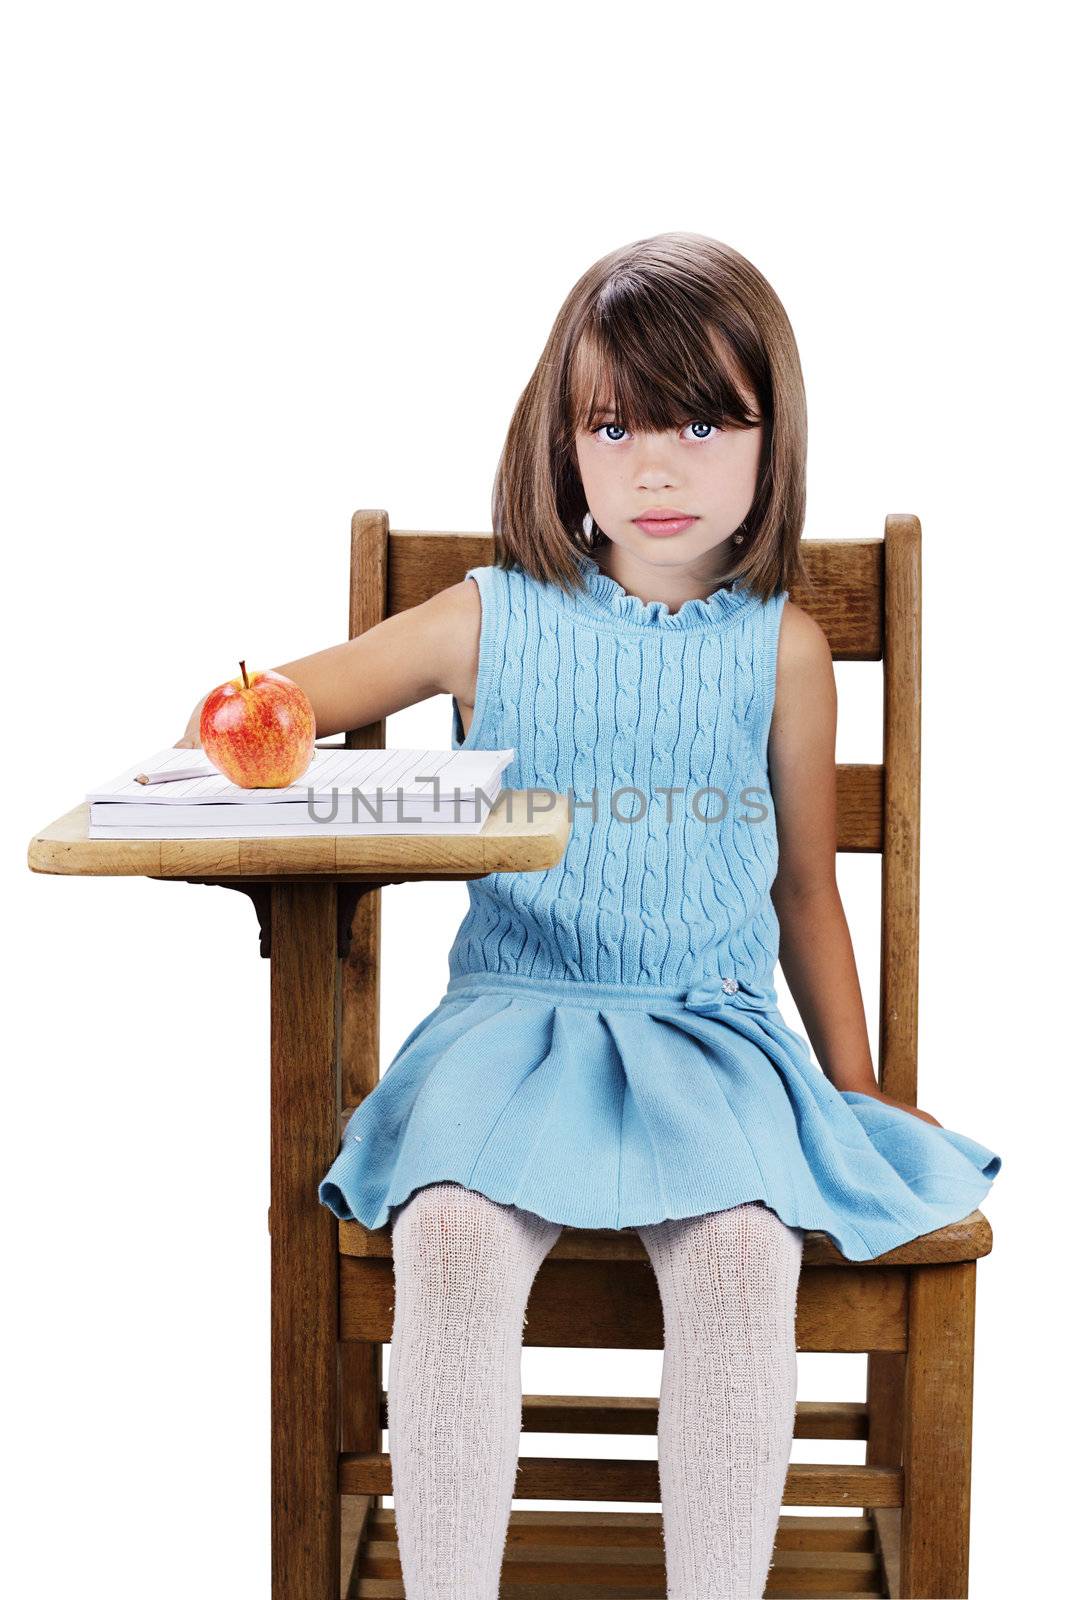 Child Sitting at School Desk by StephanieFrey